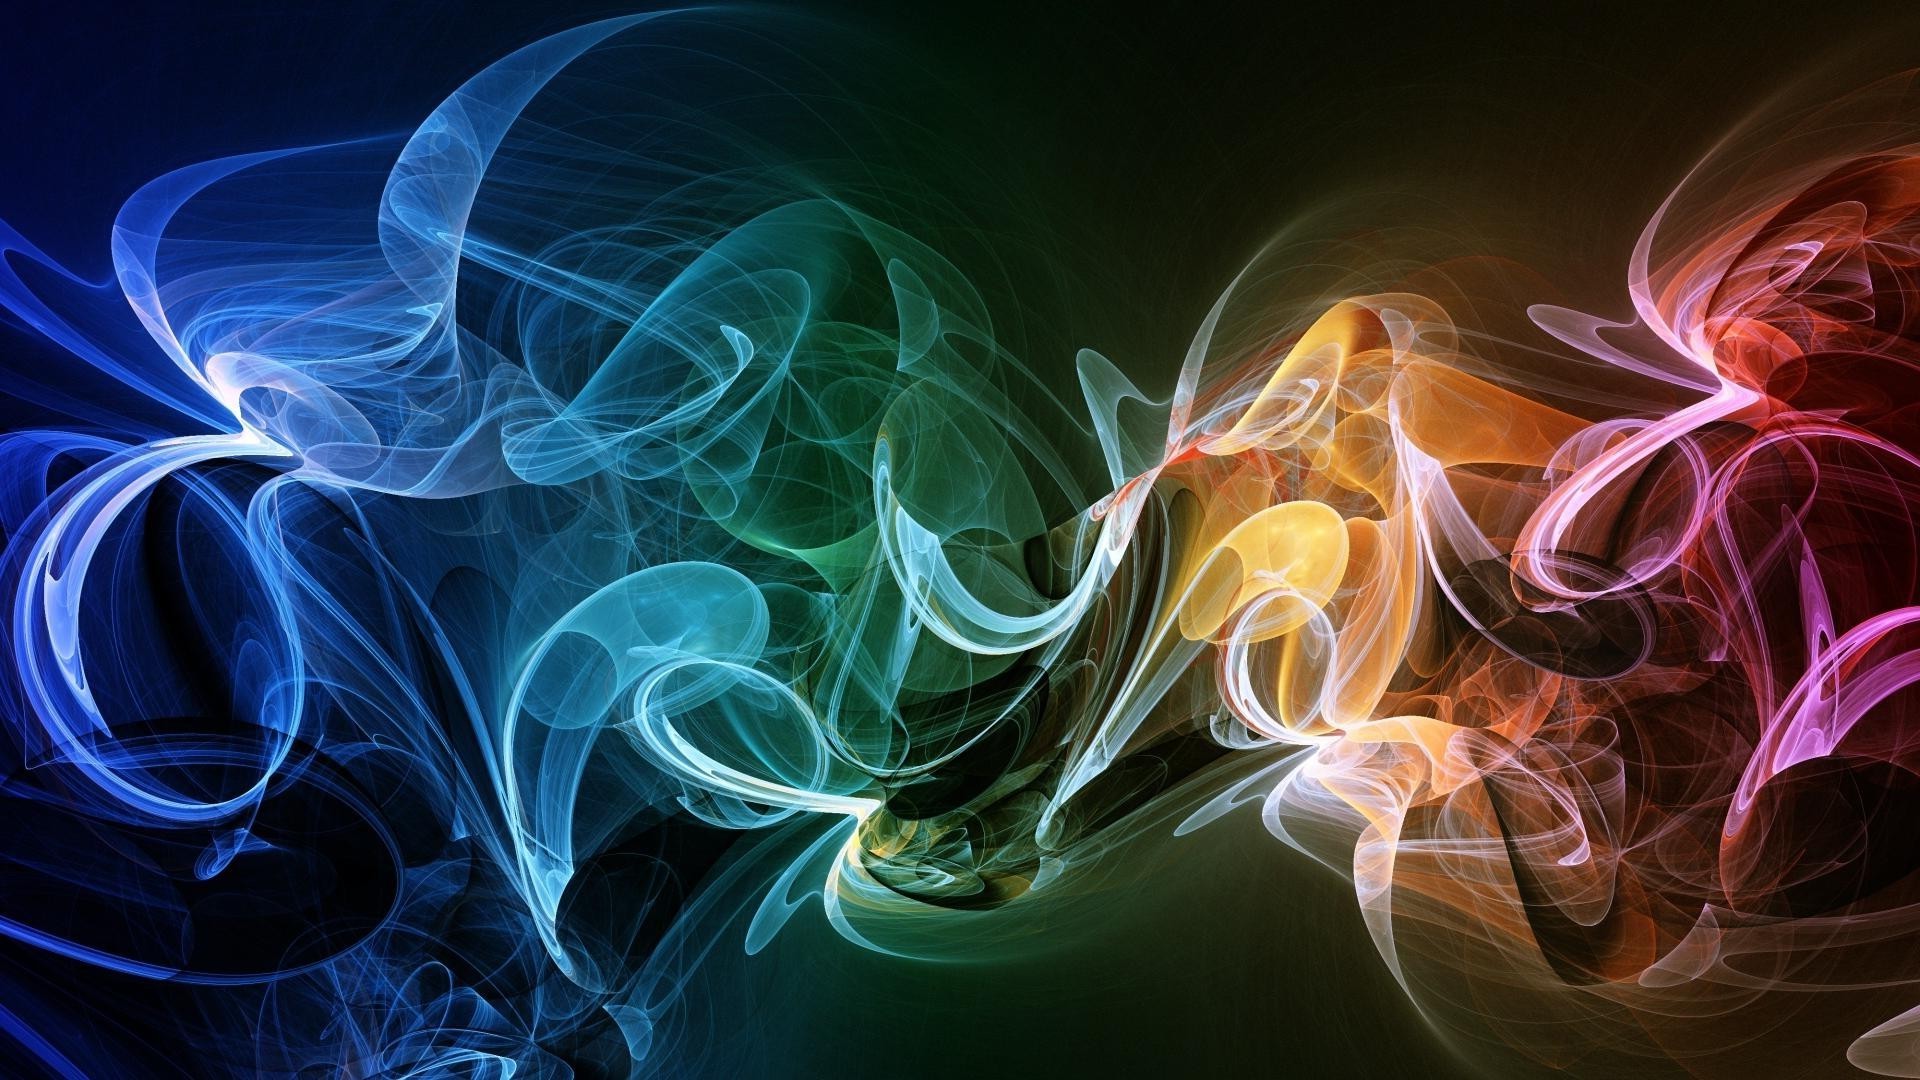 abstract dynamic wave motion curve design flow smoke flame stream pattern light fractal background wallpaper desktop effect illustration energy science